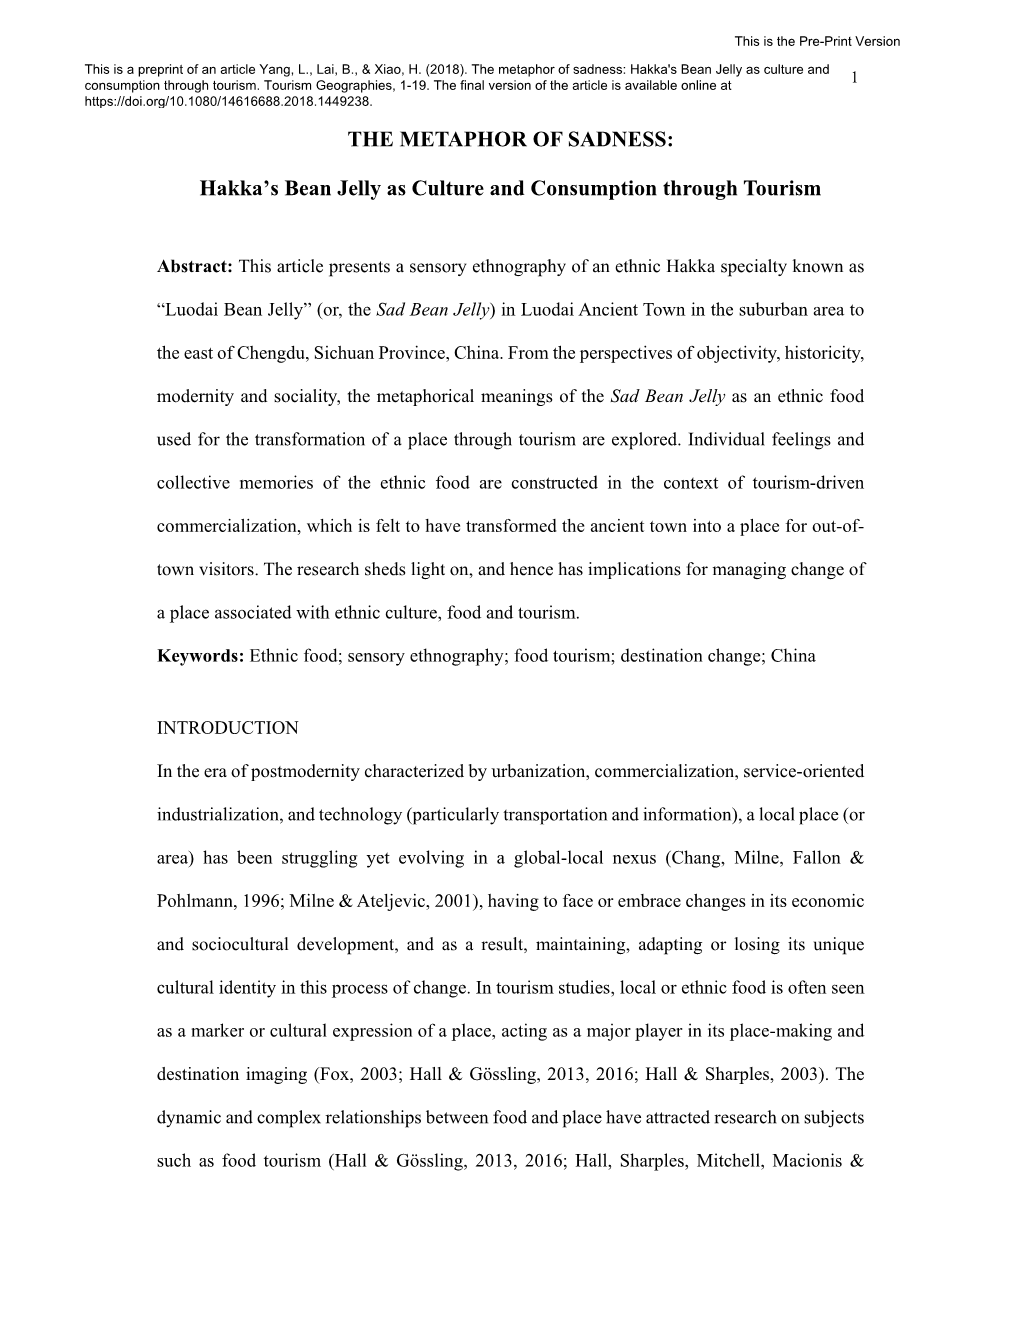 The Metaphor of Sadness: Hakka's Bean Jelly As Culture and 1 Consumption Through Tourism